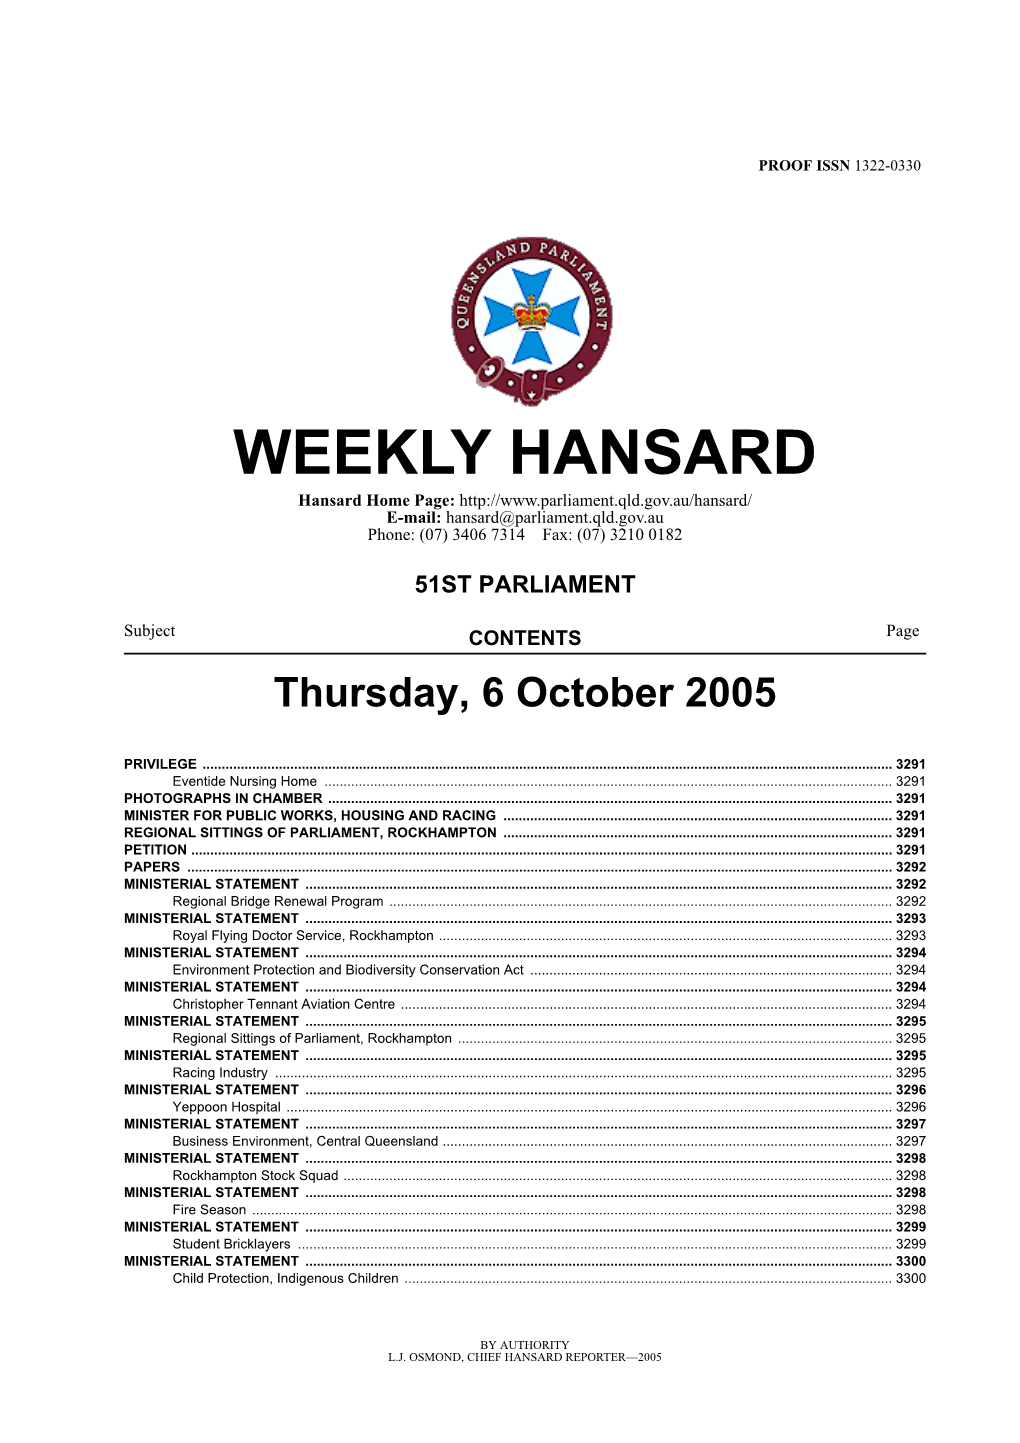 WEEKLY HANSARD Hansard Home Page: E-Mail: Hansard@Parliament.Qld.Gov.Au Phone: (07) 3406 7314 Fax: (07) 3210 0182